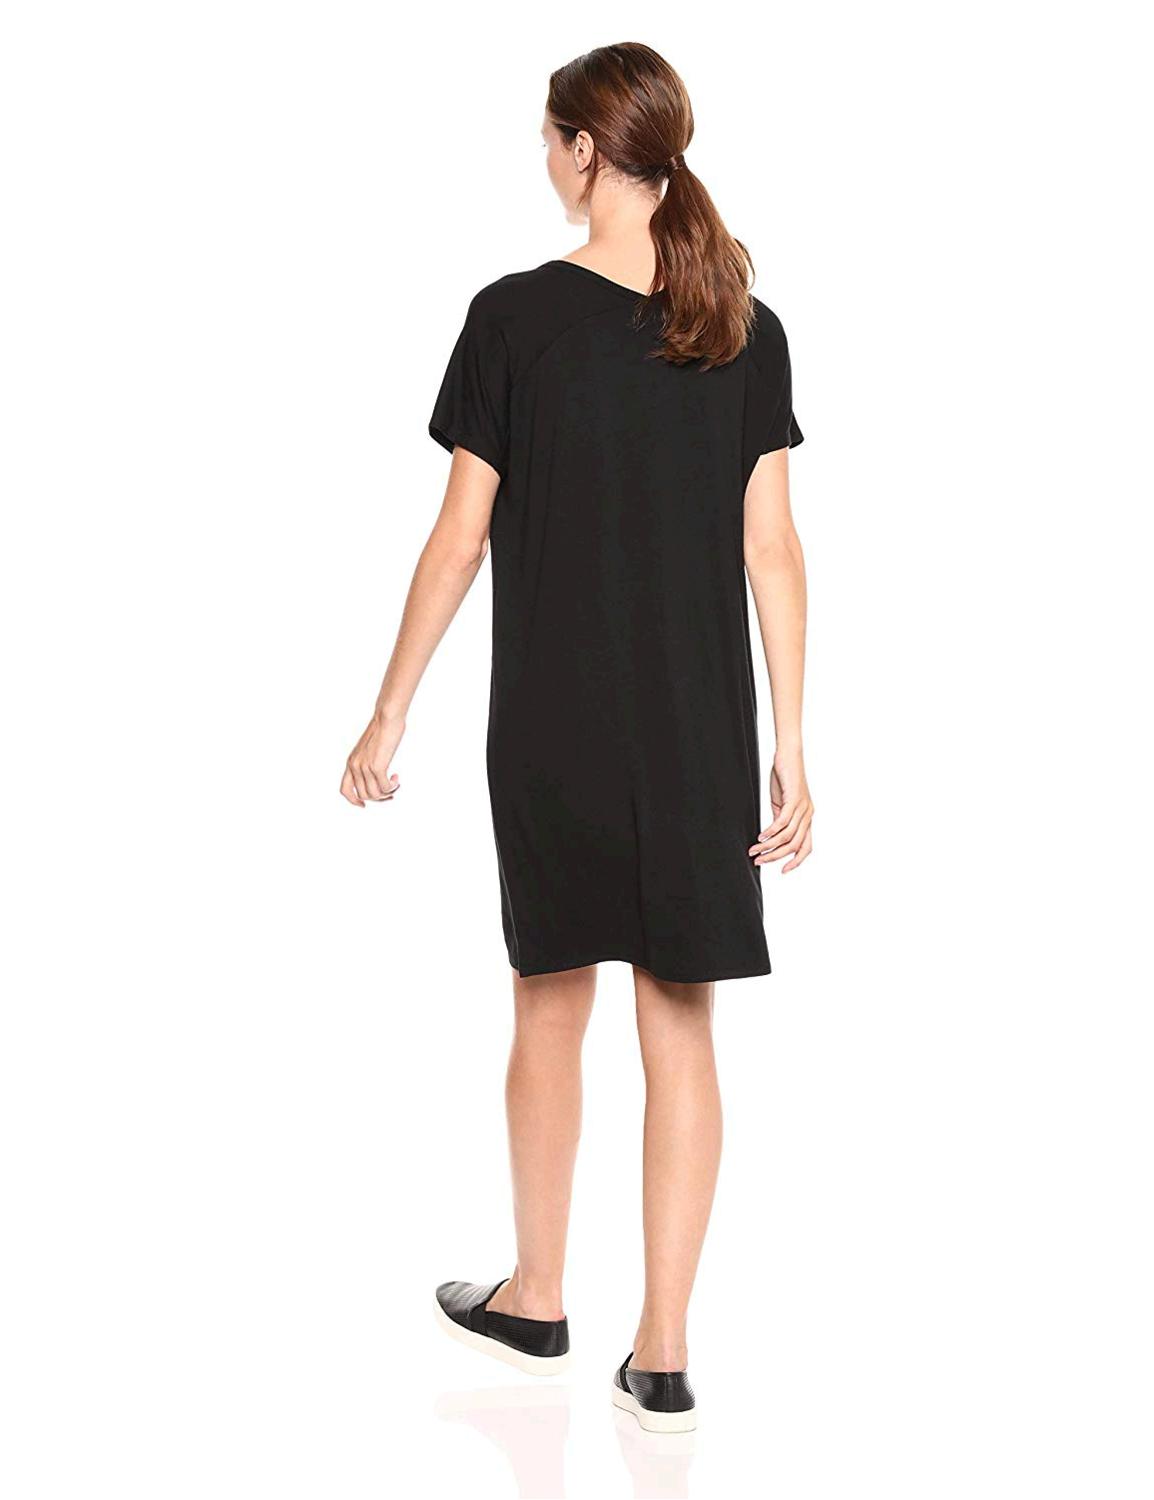 Daily Ritual Women's Jersey Short-Sleeve V-Neck Dress, black, Small